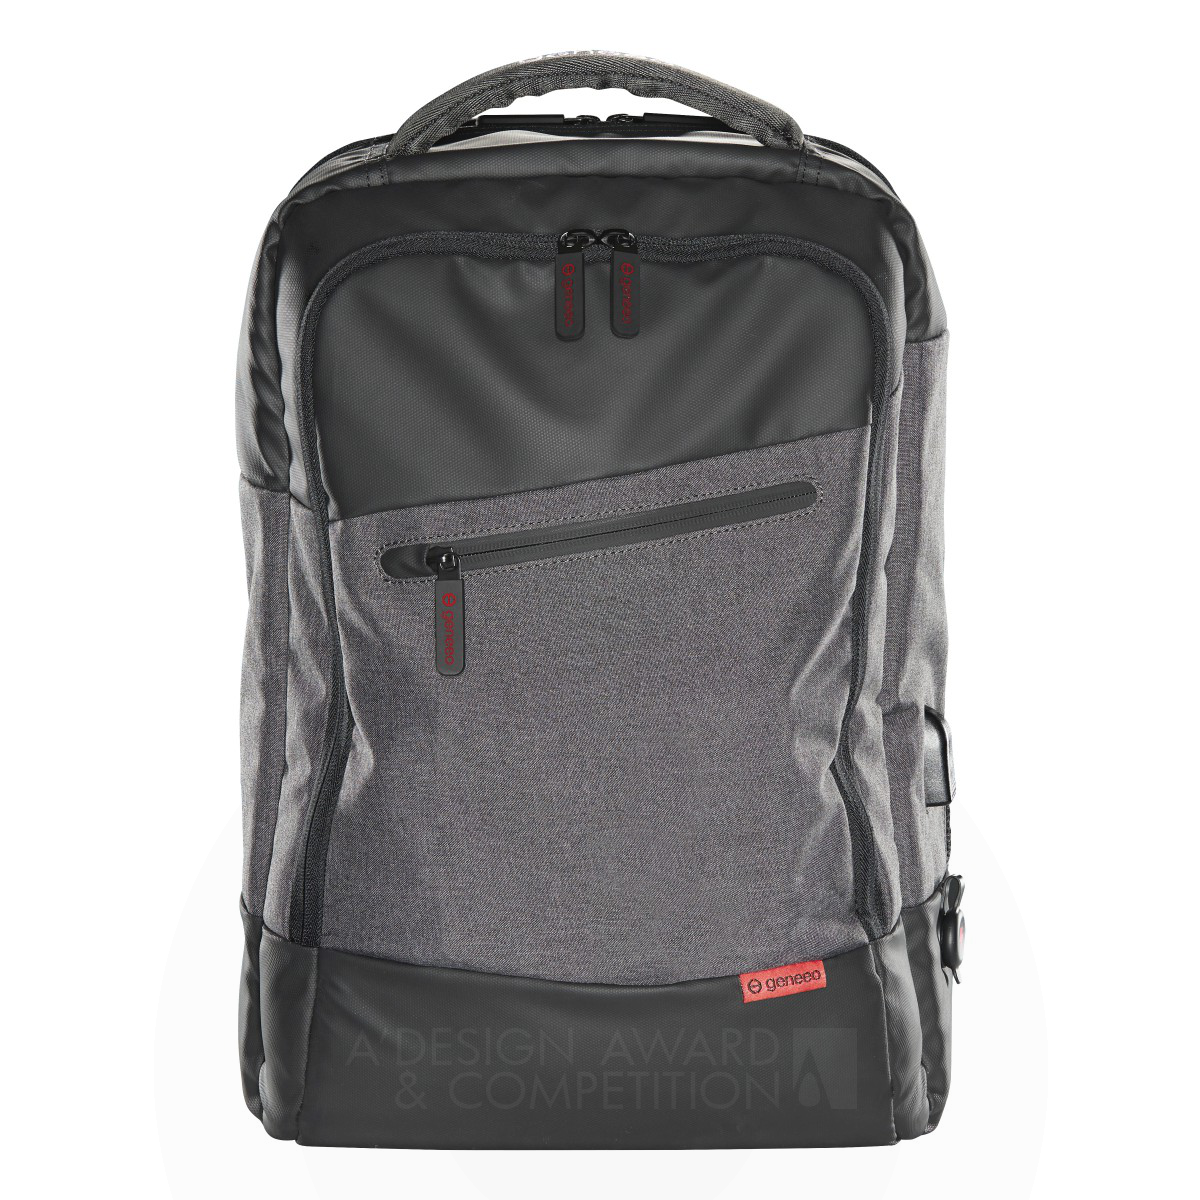 Genius Pack Platinum Smart Backpack by ALEX FERIOTTO